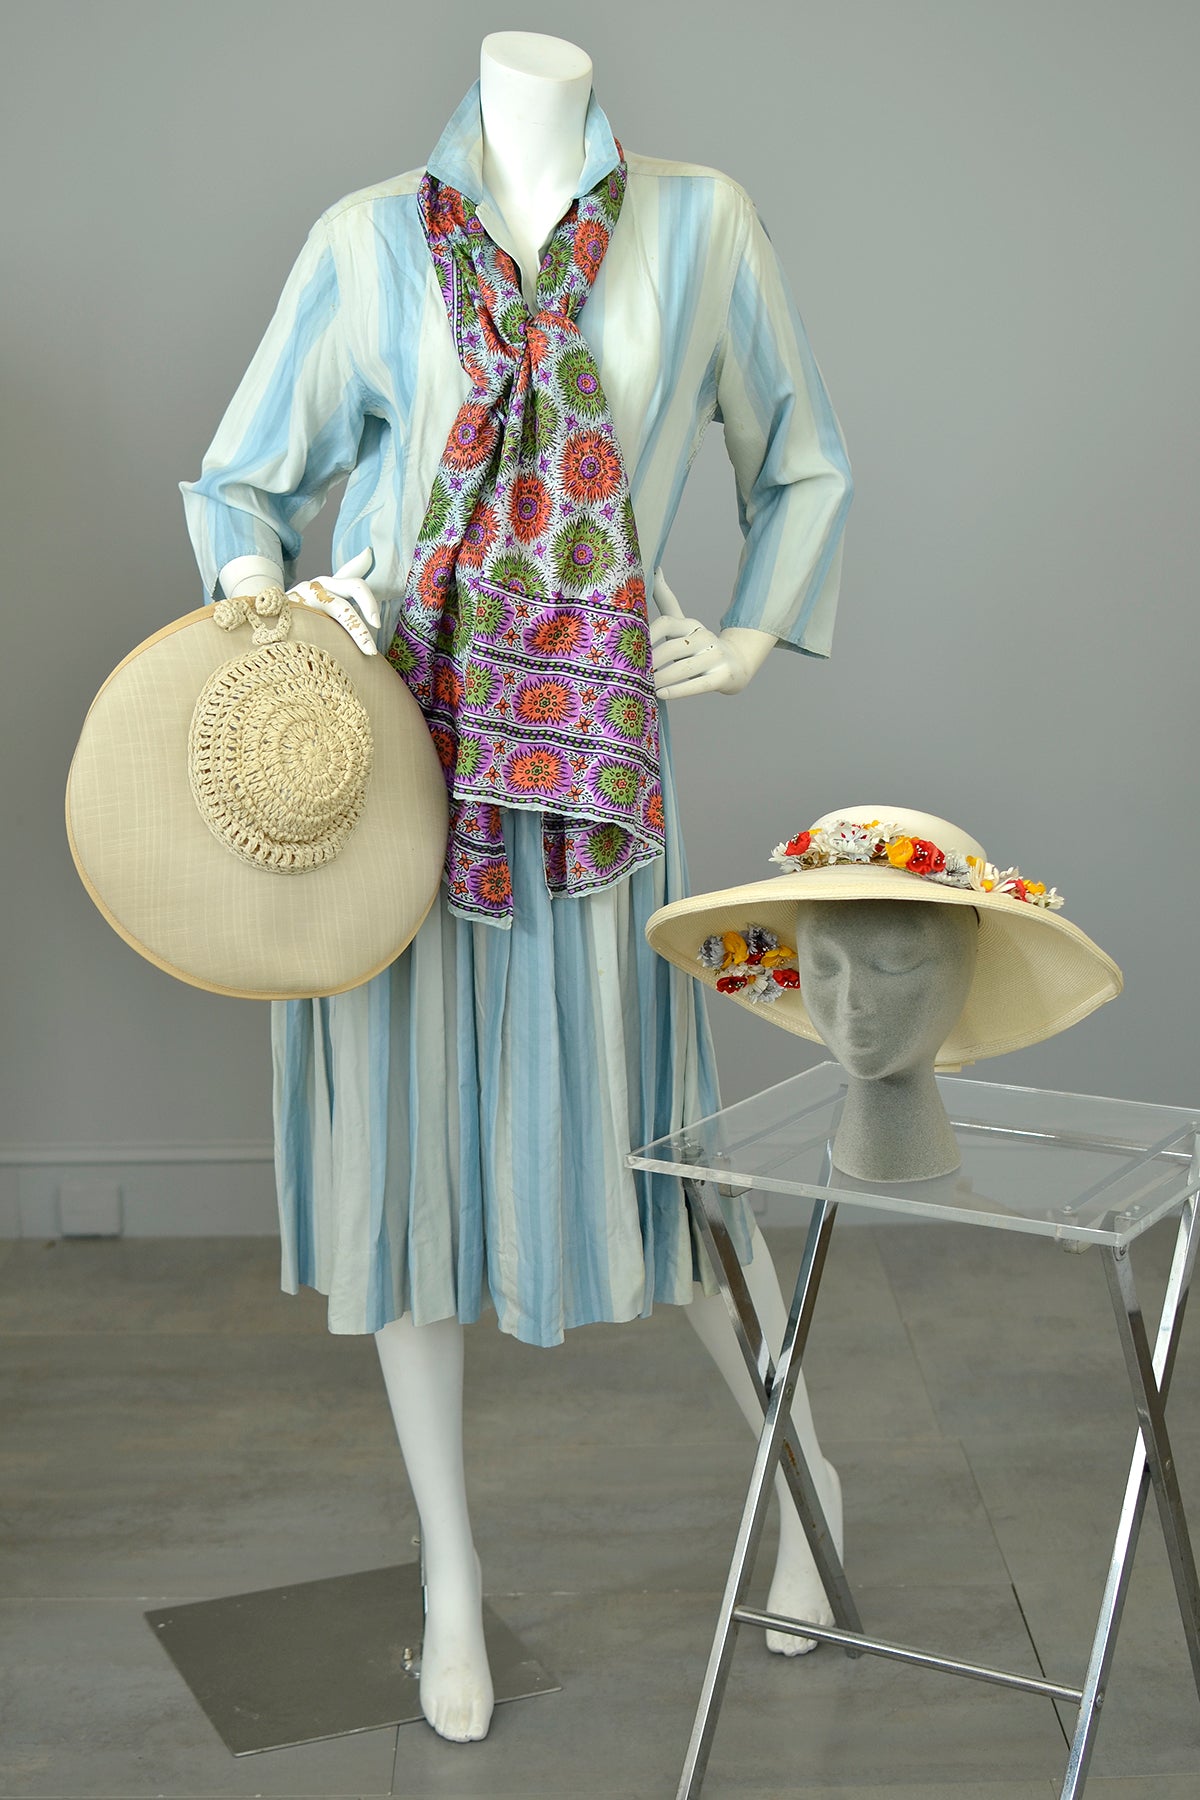 1950s 60s Sky Blue Striped Silk Shirtwaist Dress | Condition issues